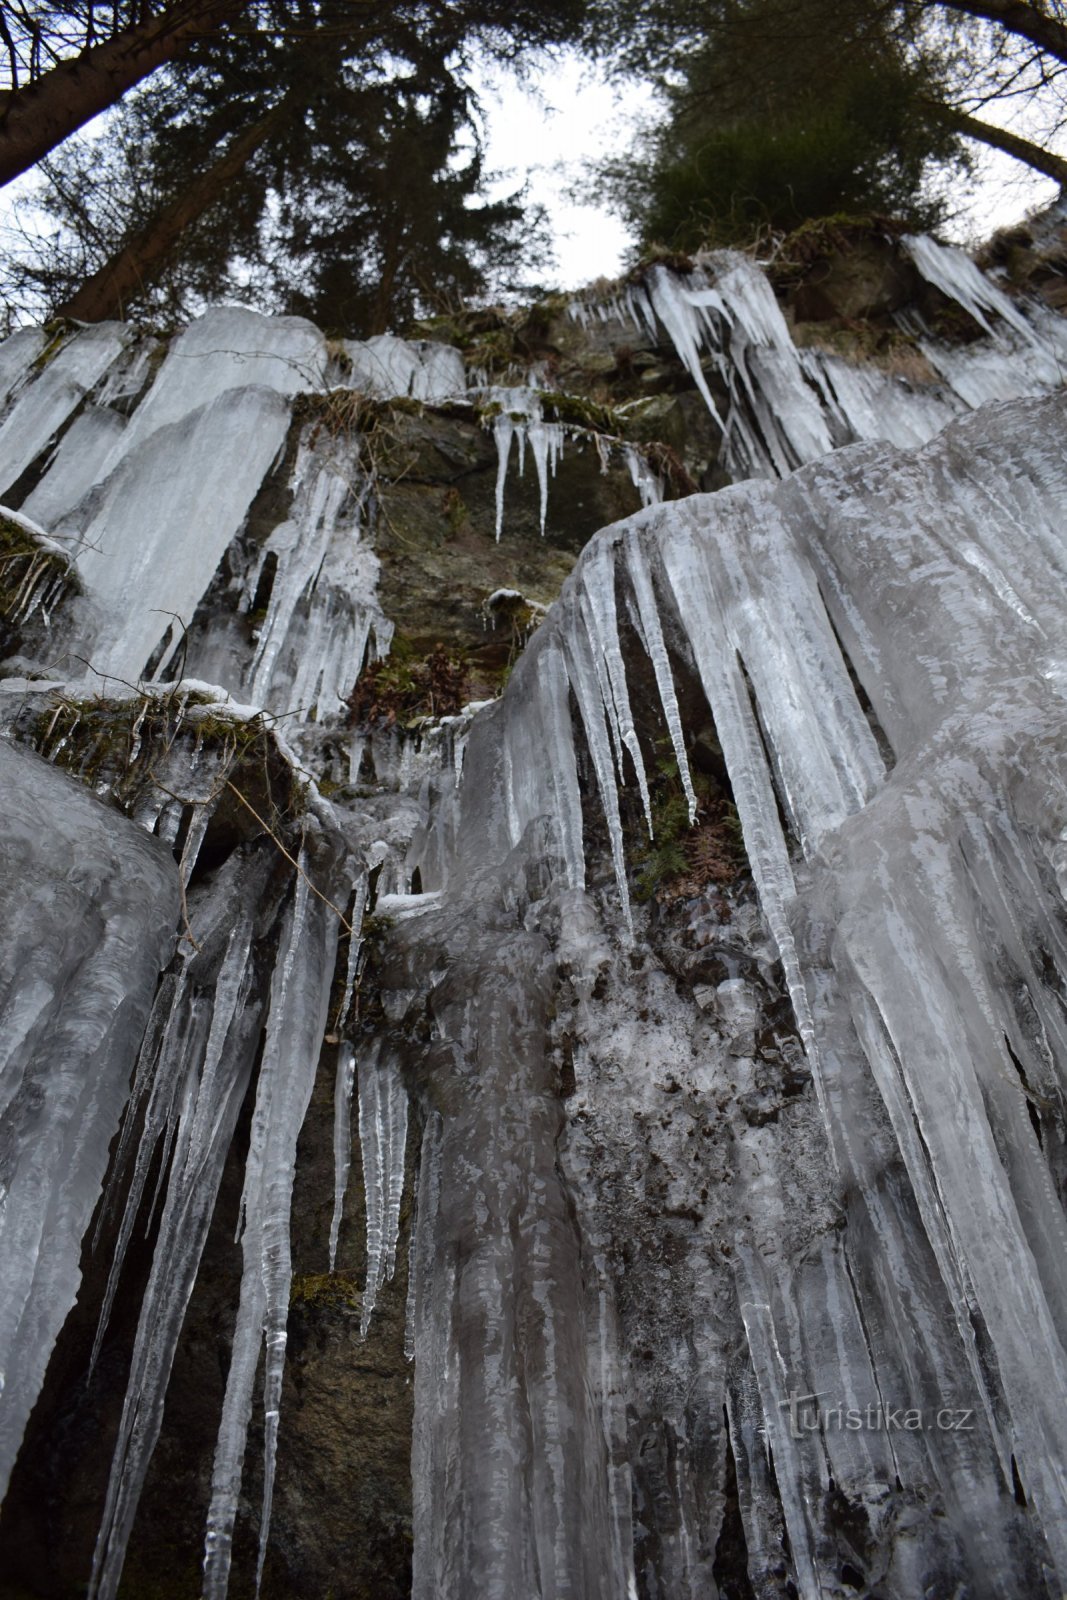 Icefall near Želiva.